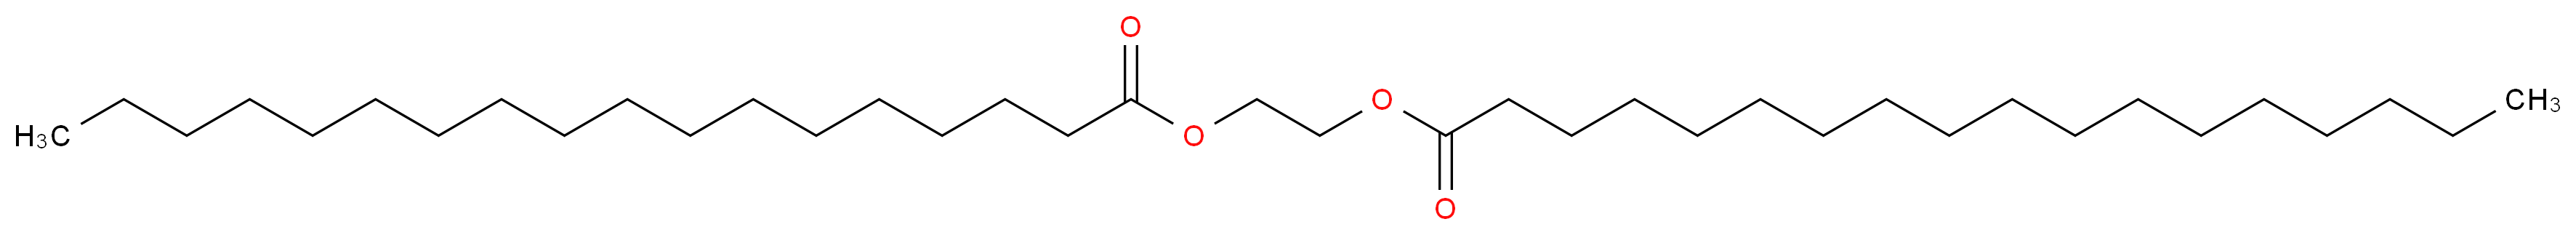 Glycol distearate_Molecular_structure_CAS_627-83-8)